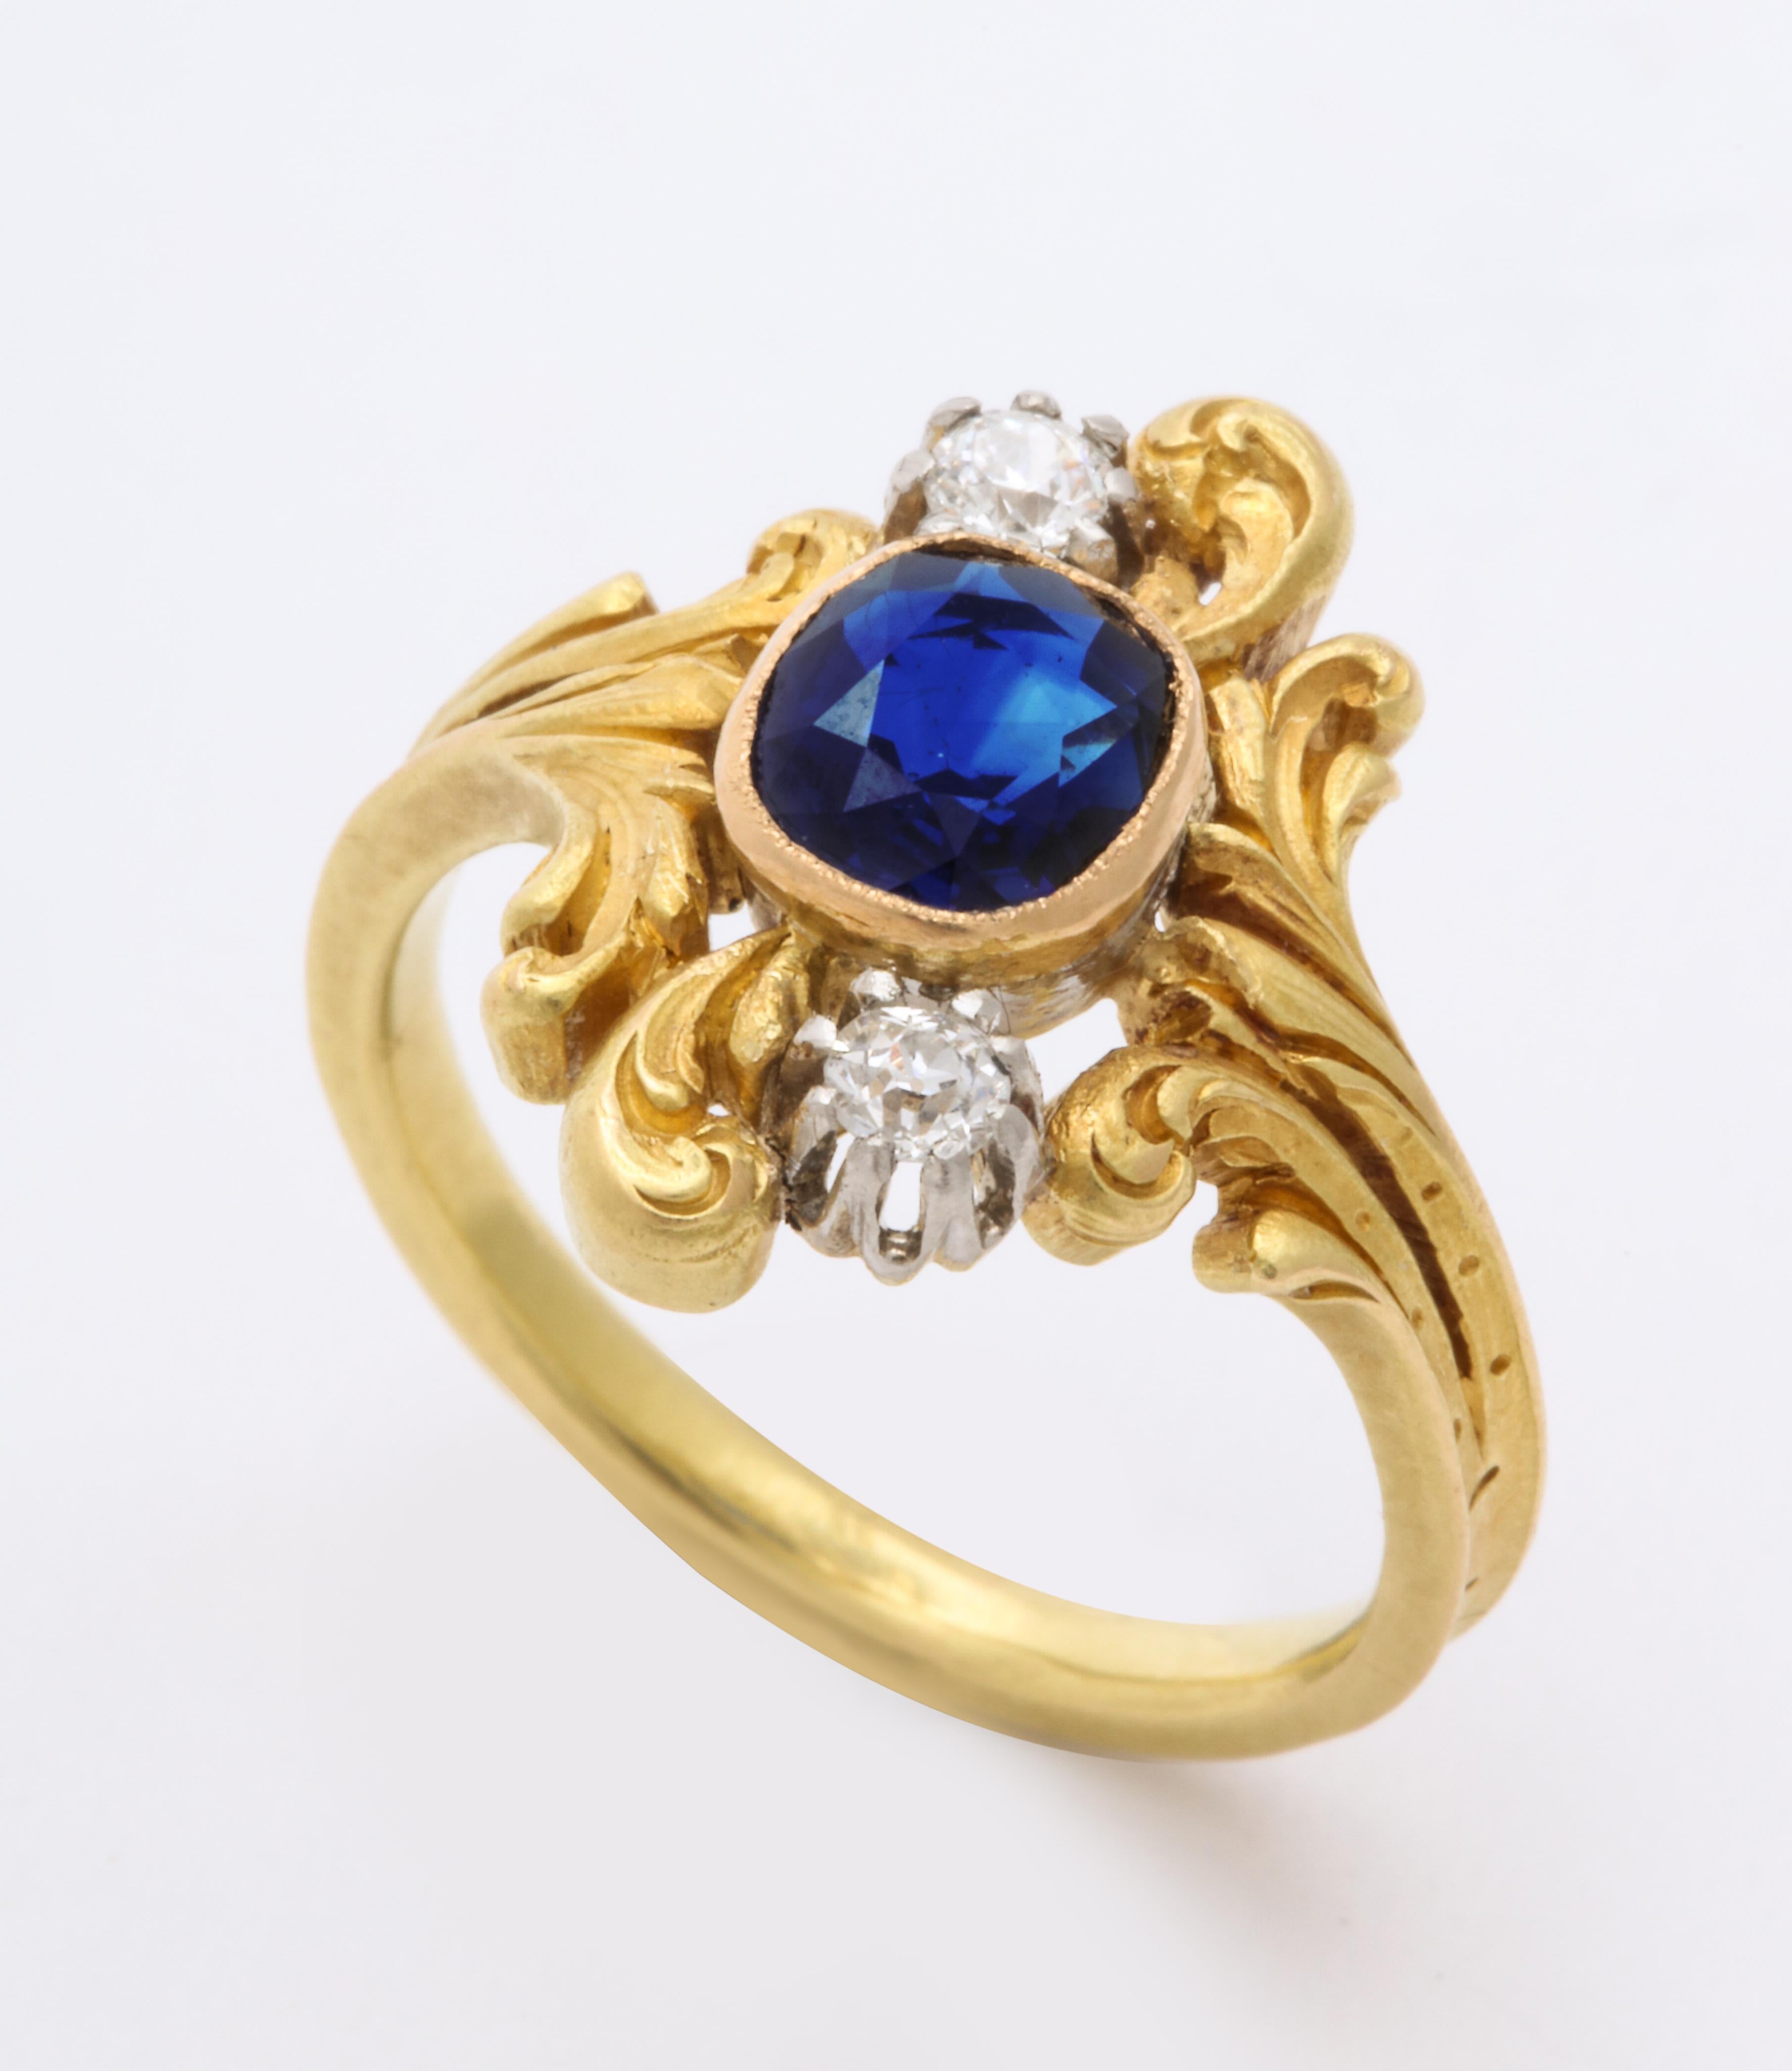 Women's Antique Art Nouveau French Sapphire and Diamond Ring